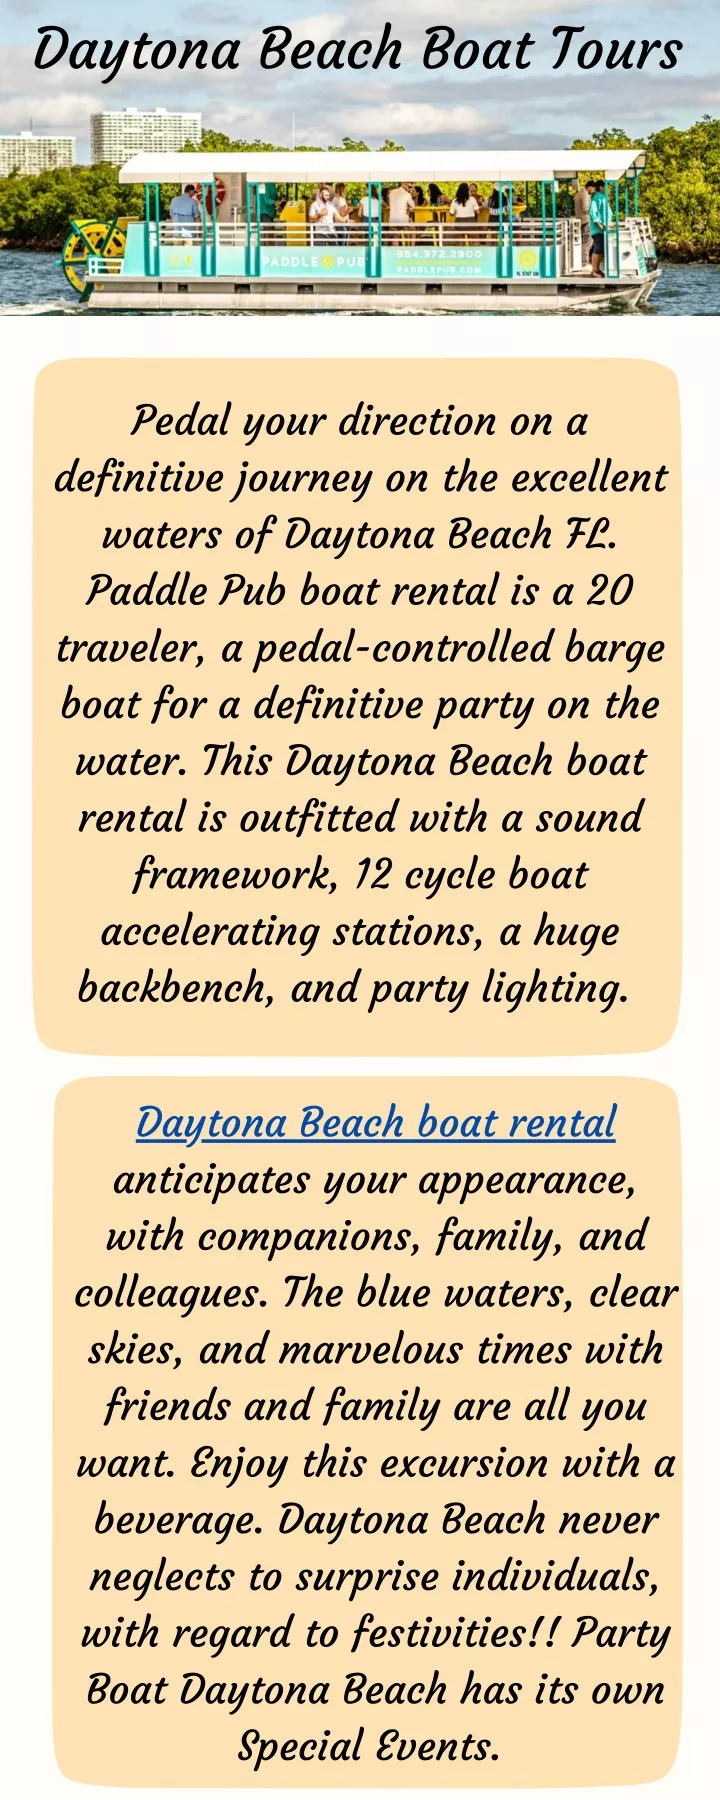 daytona beach boat tours